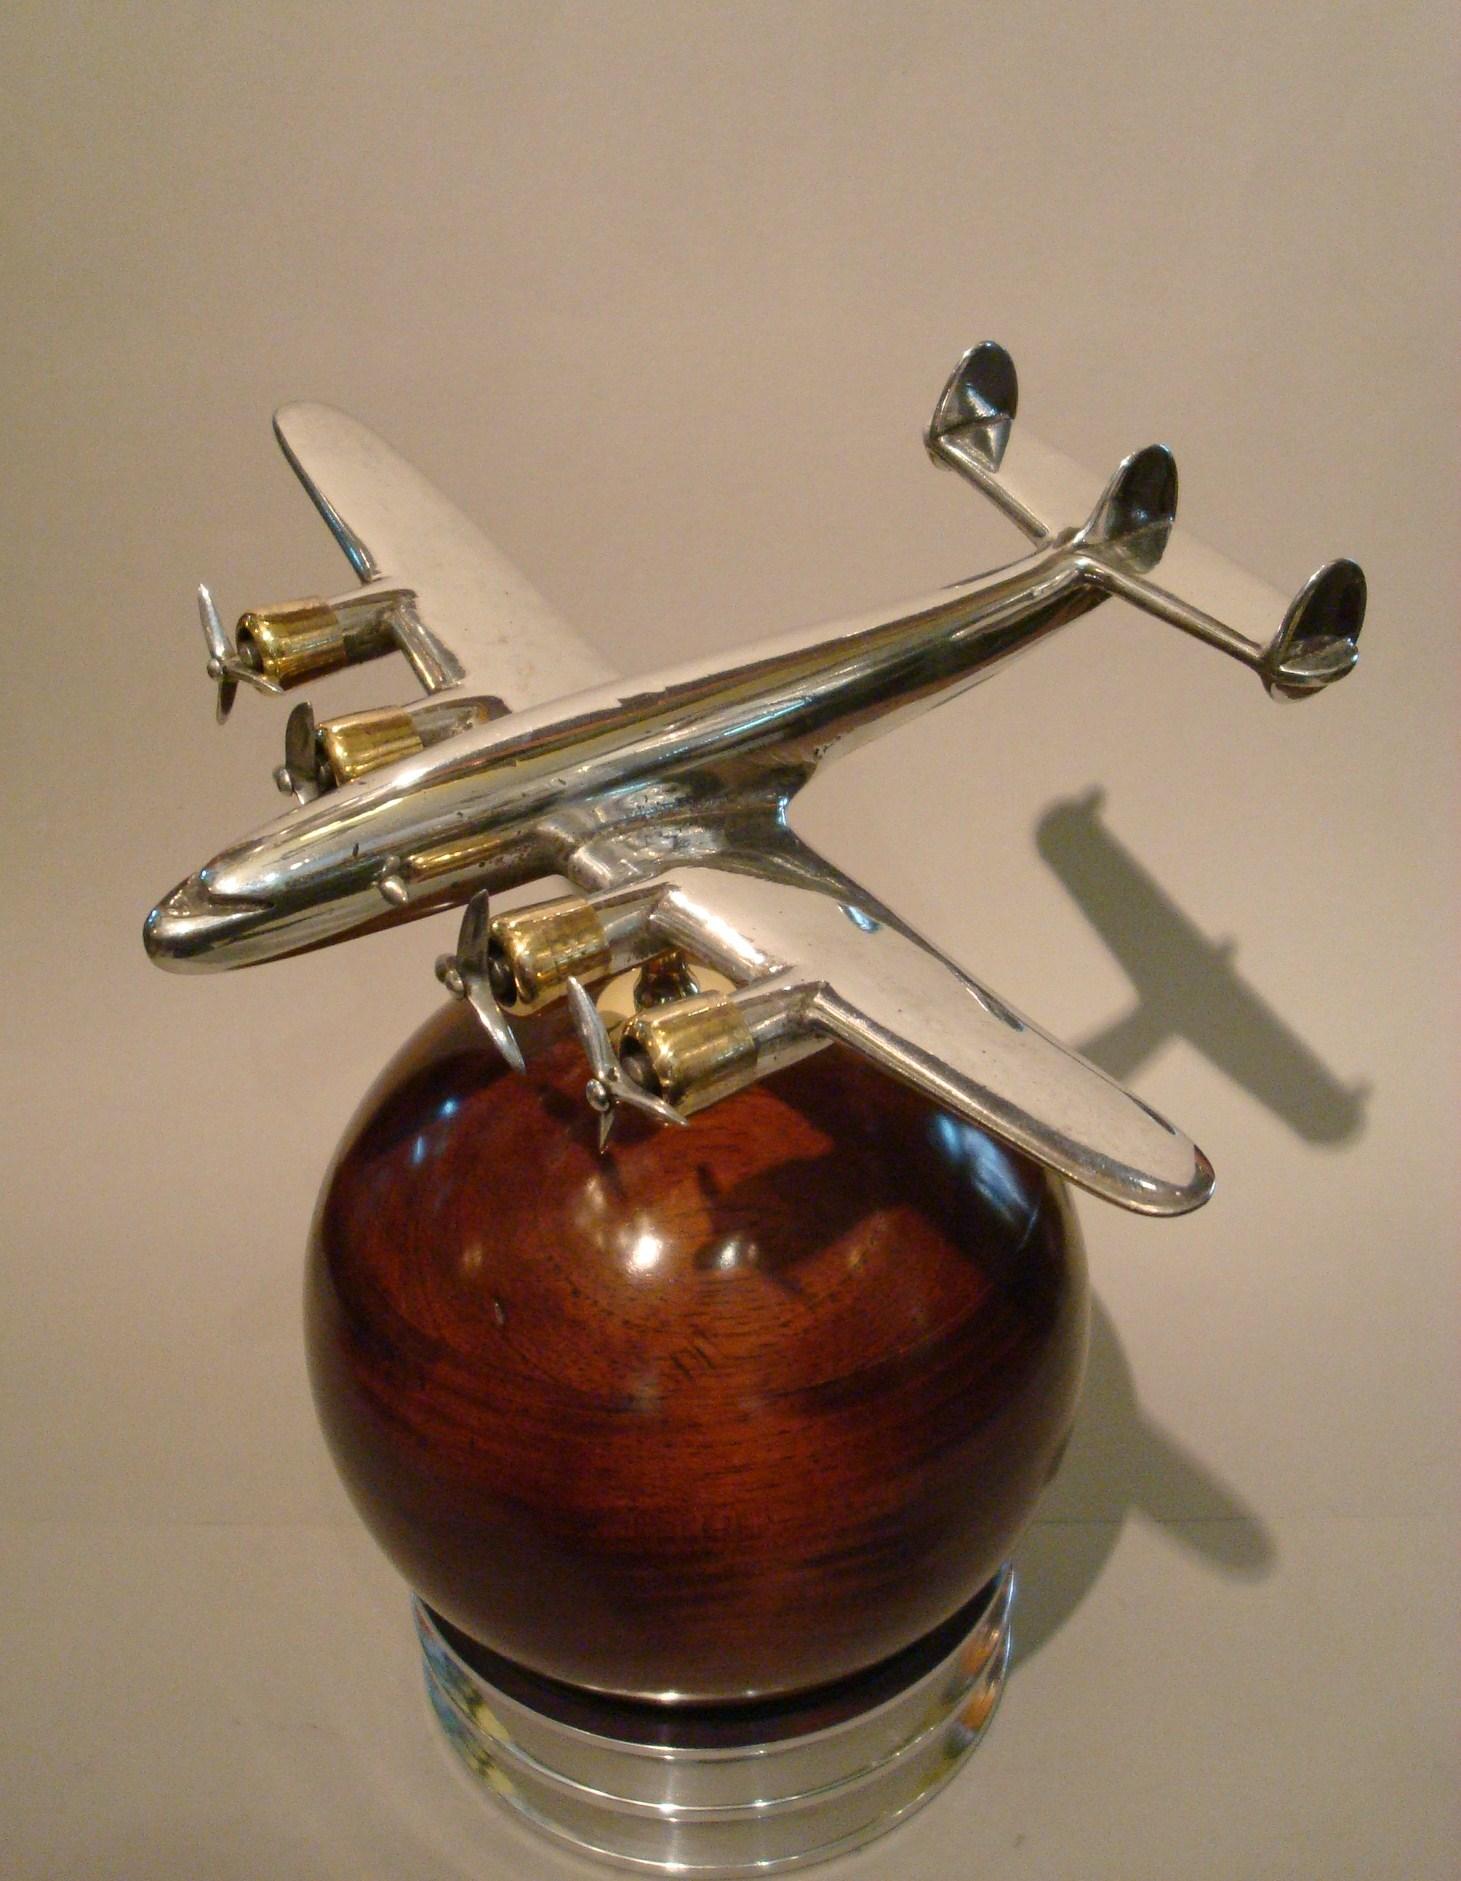 American Aviation Lockheed Constellation Vintage Desk Airplane Model